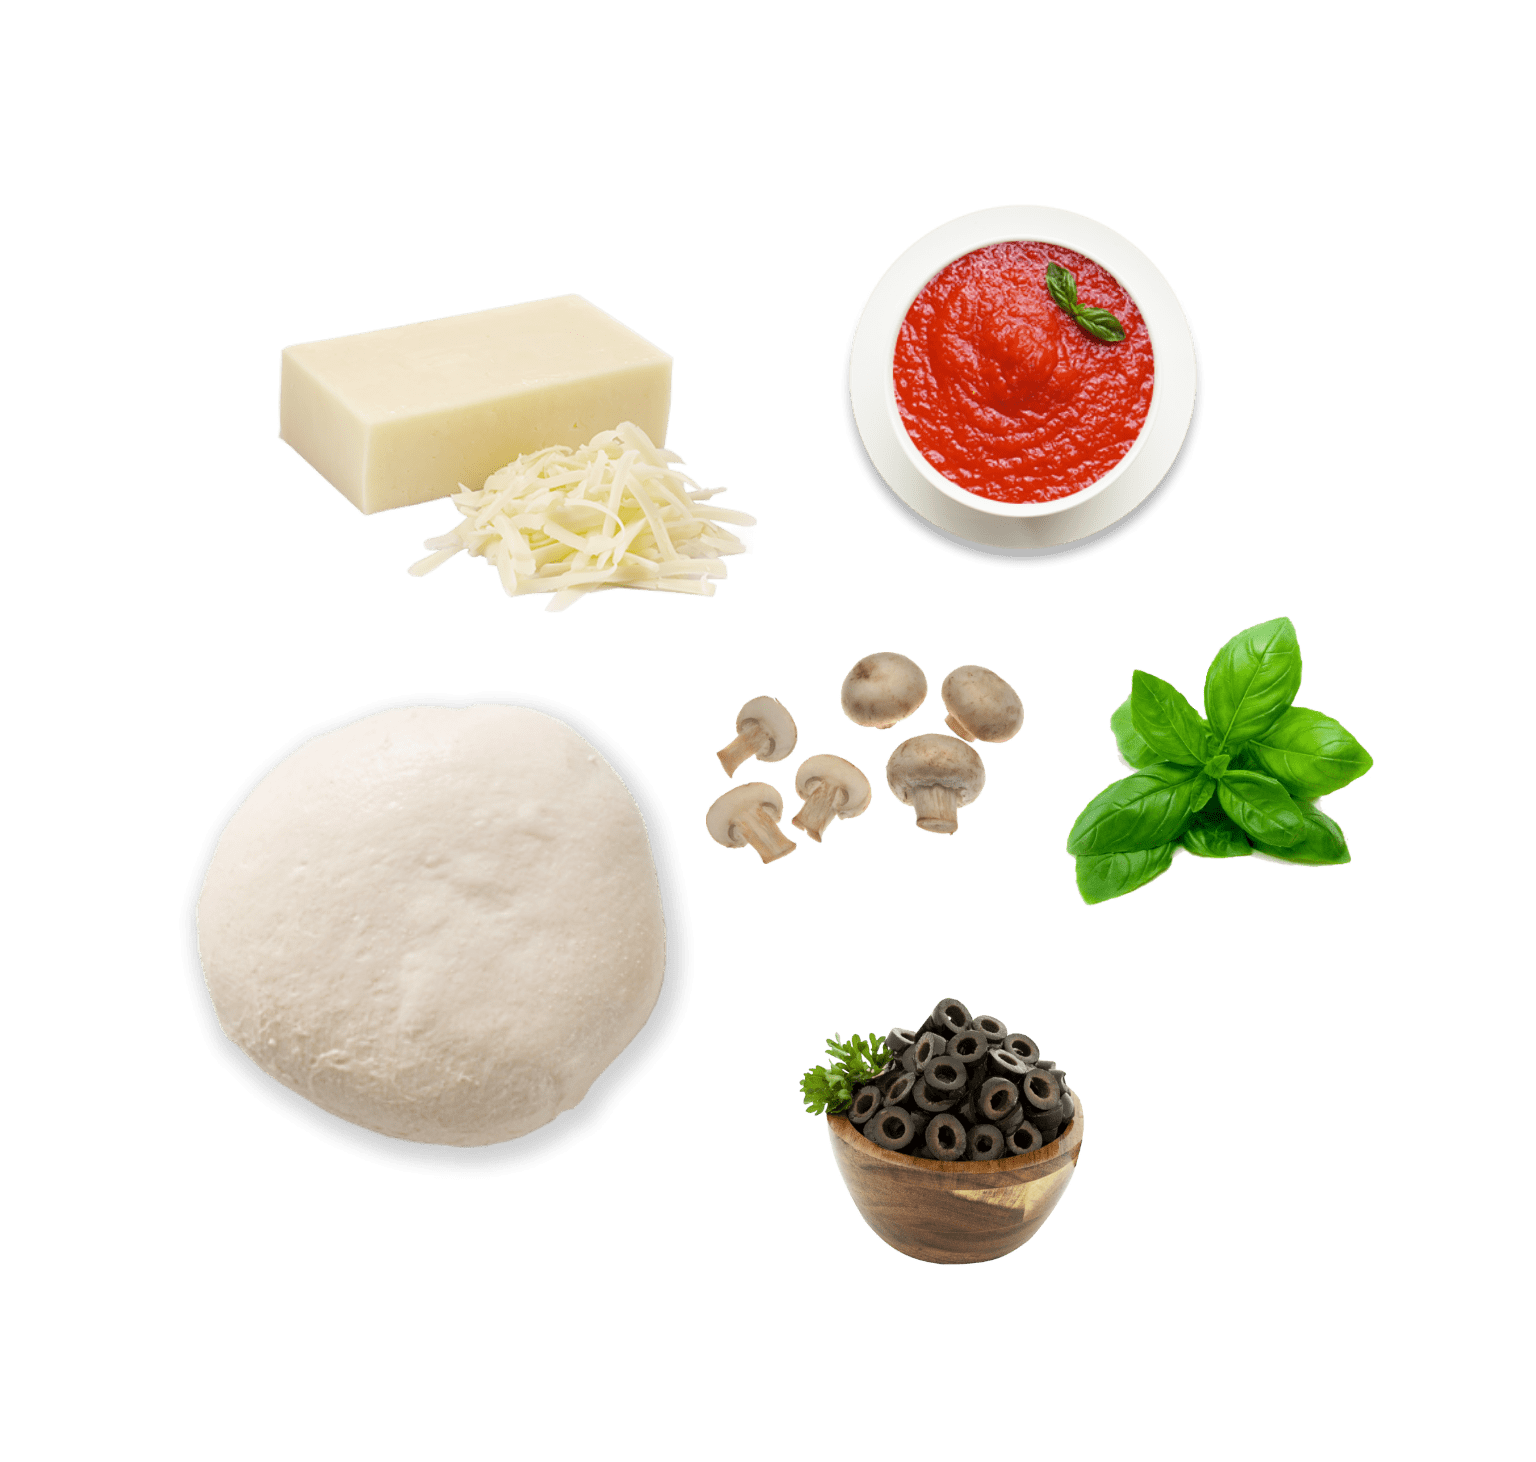 pizza kit ingredients